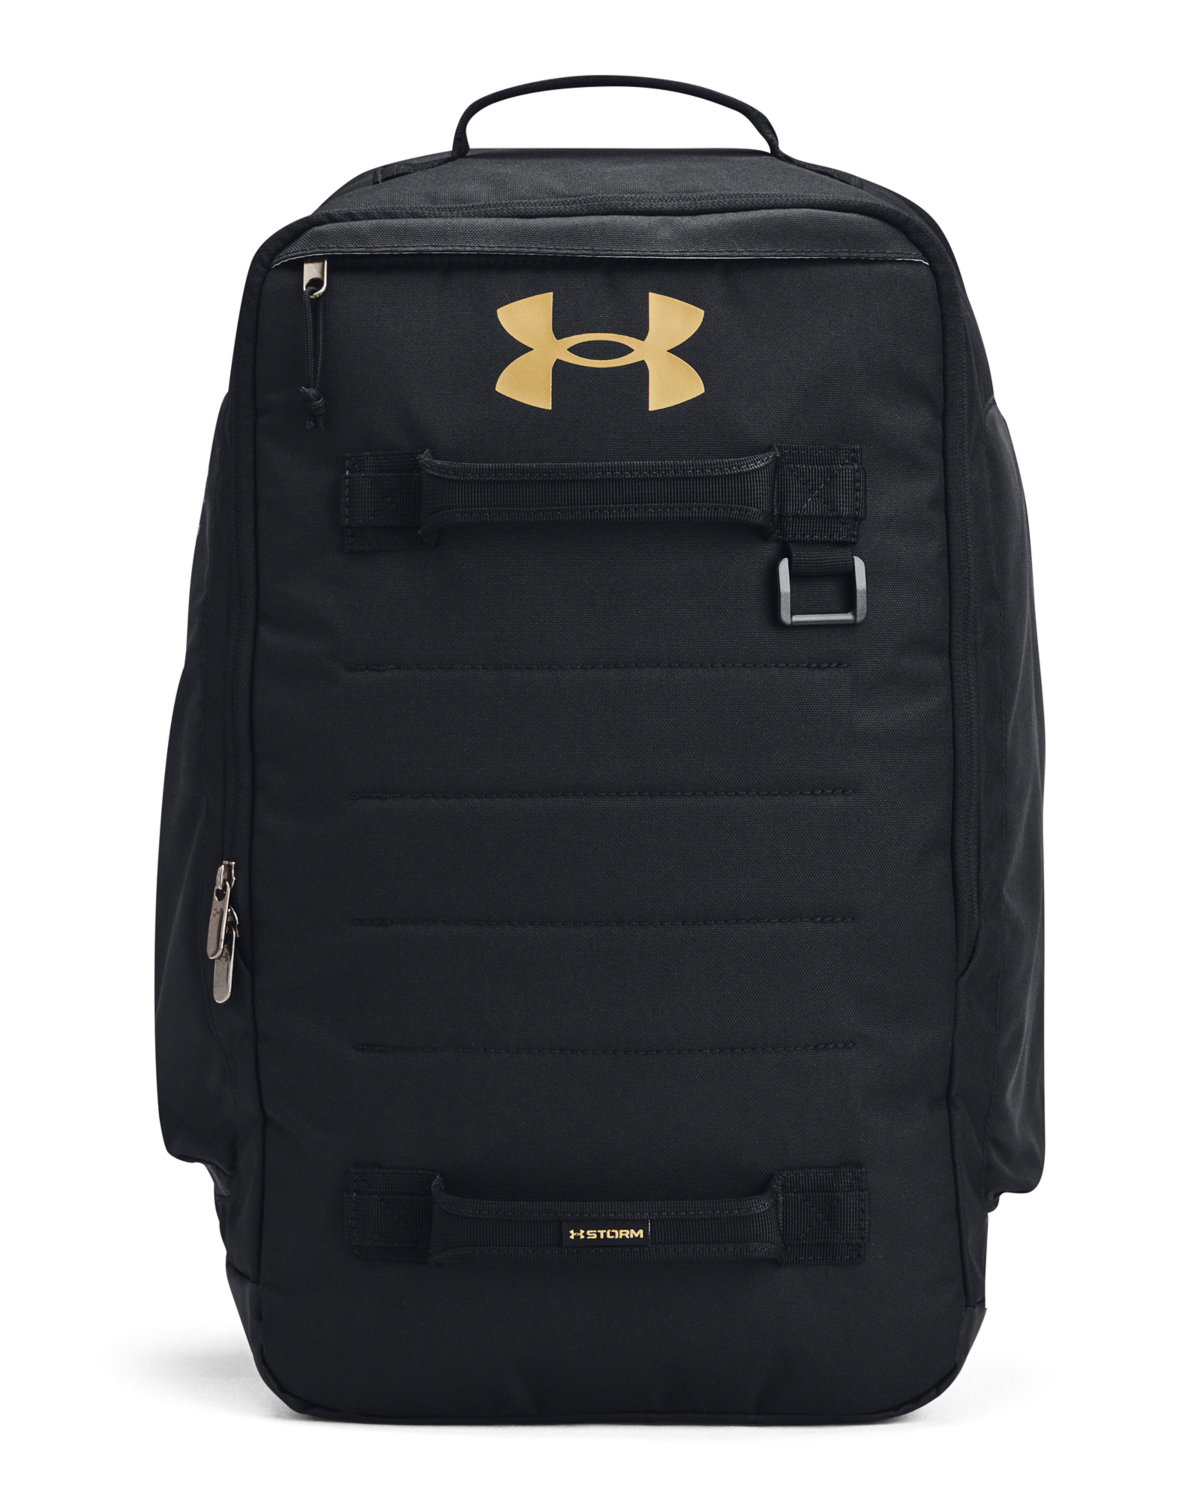 UA Undeniable 5.0 XL Duffle Bag | Under Armour